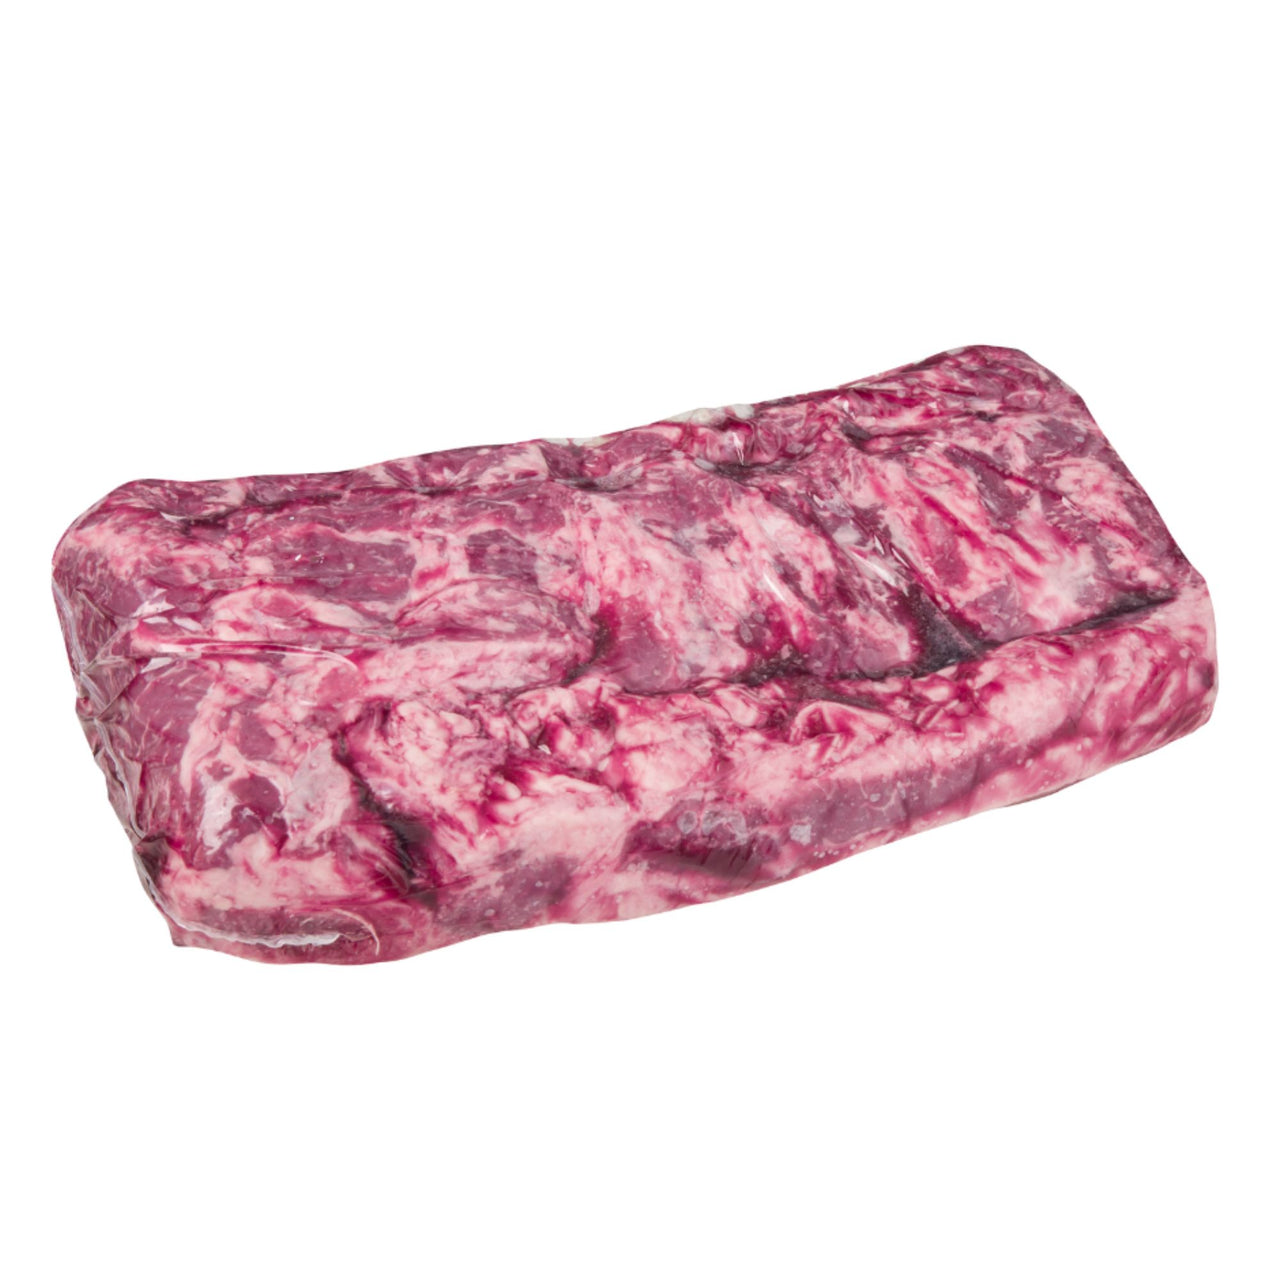 Image of AAA Boneless Whole Beef Striploin